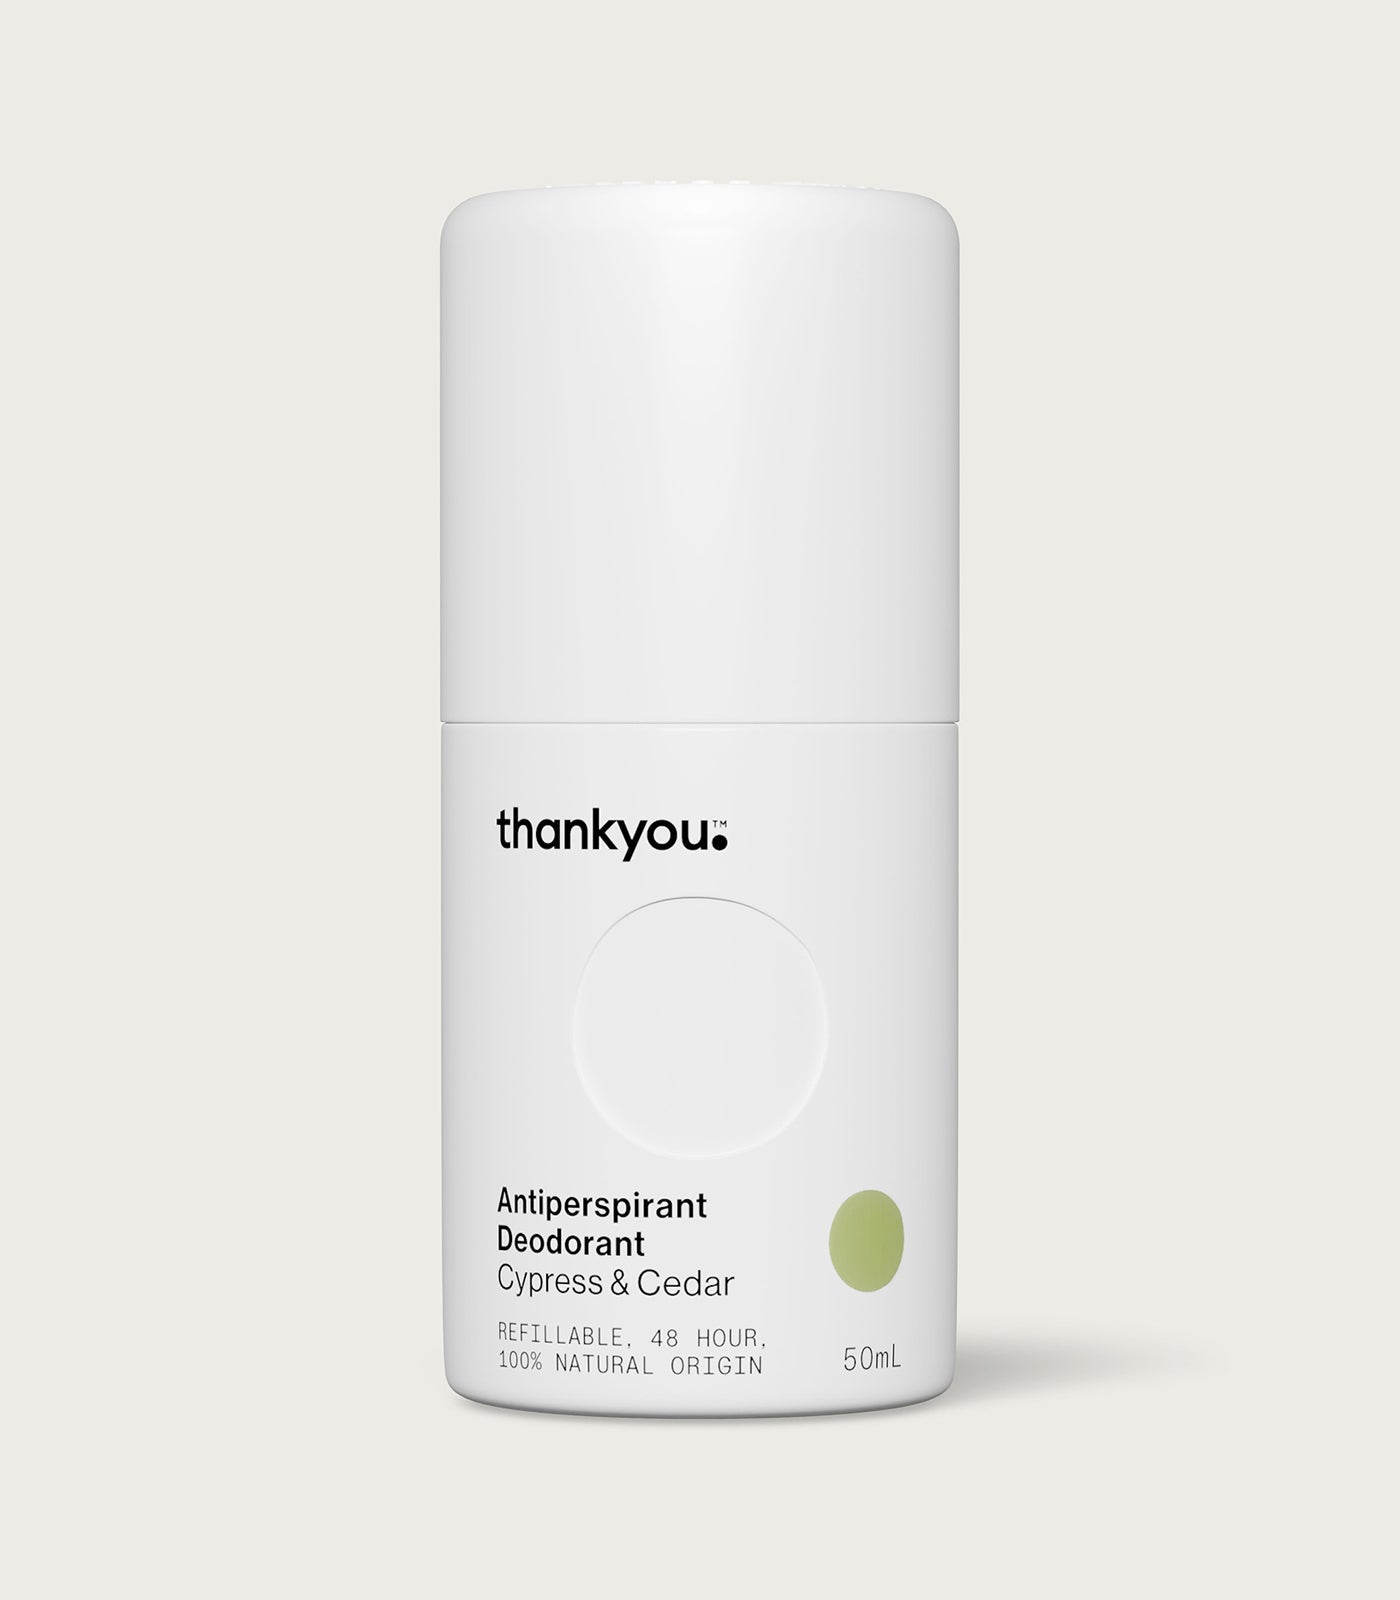 Antiperspirant Deodorant - Cypress & Cedar - 50mL - Front - Thankyou